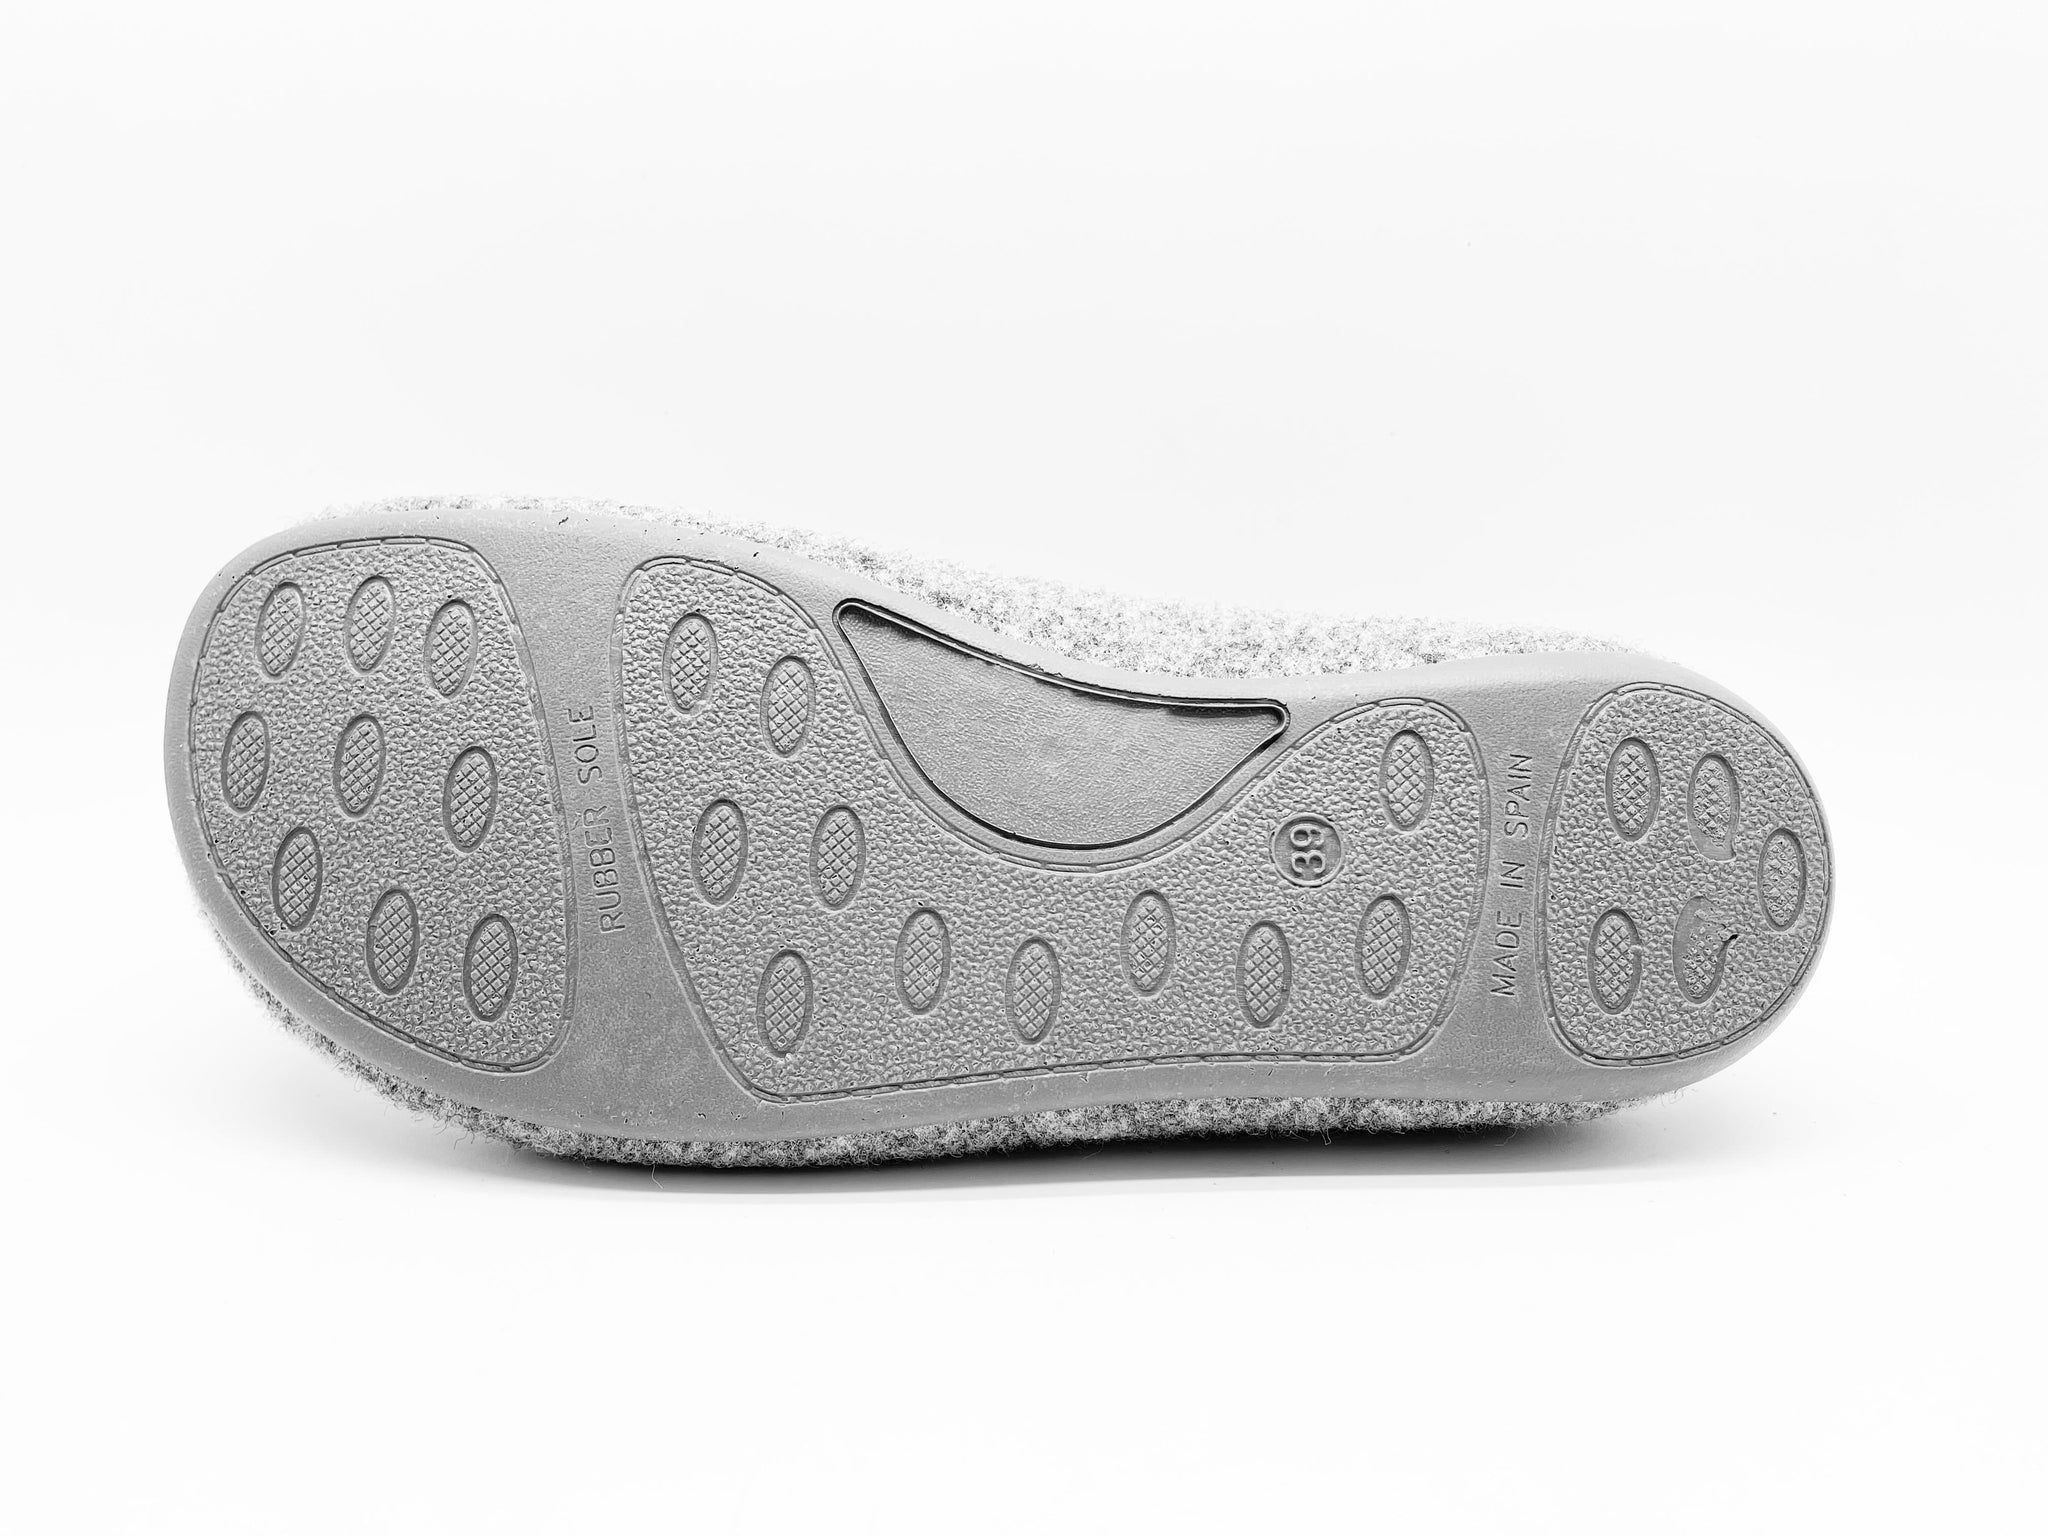 NAT 2 calzado thies 1856 ® Zapatilla de PET reciclado vegano gris claro (W / M / X) moda sostenible moda ética